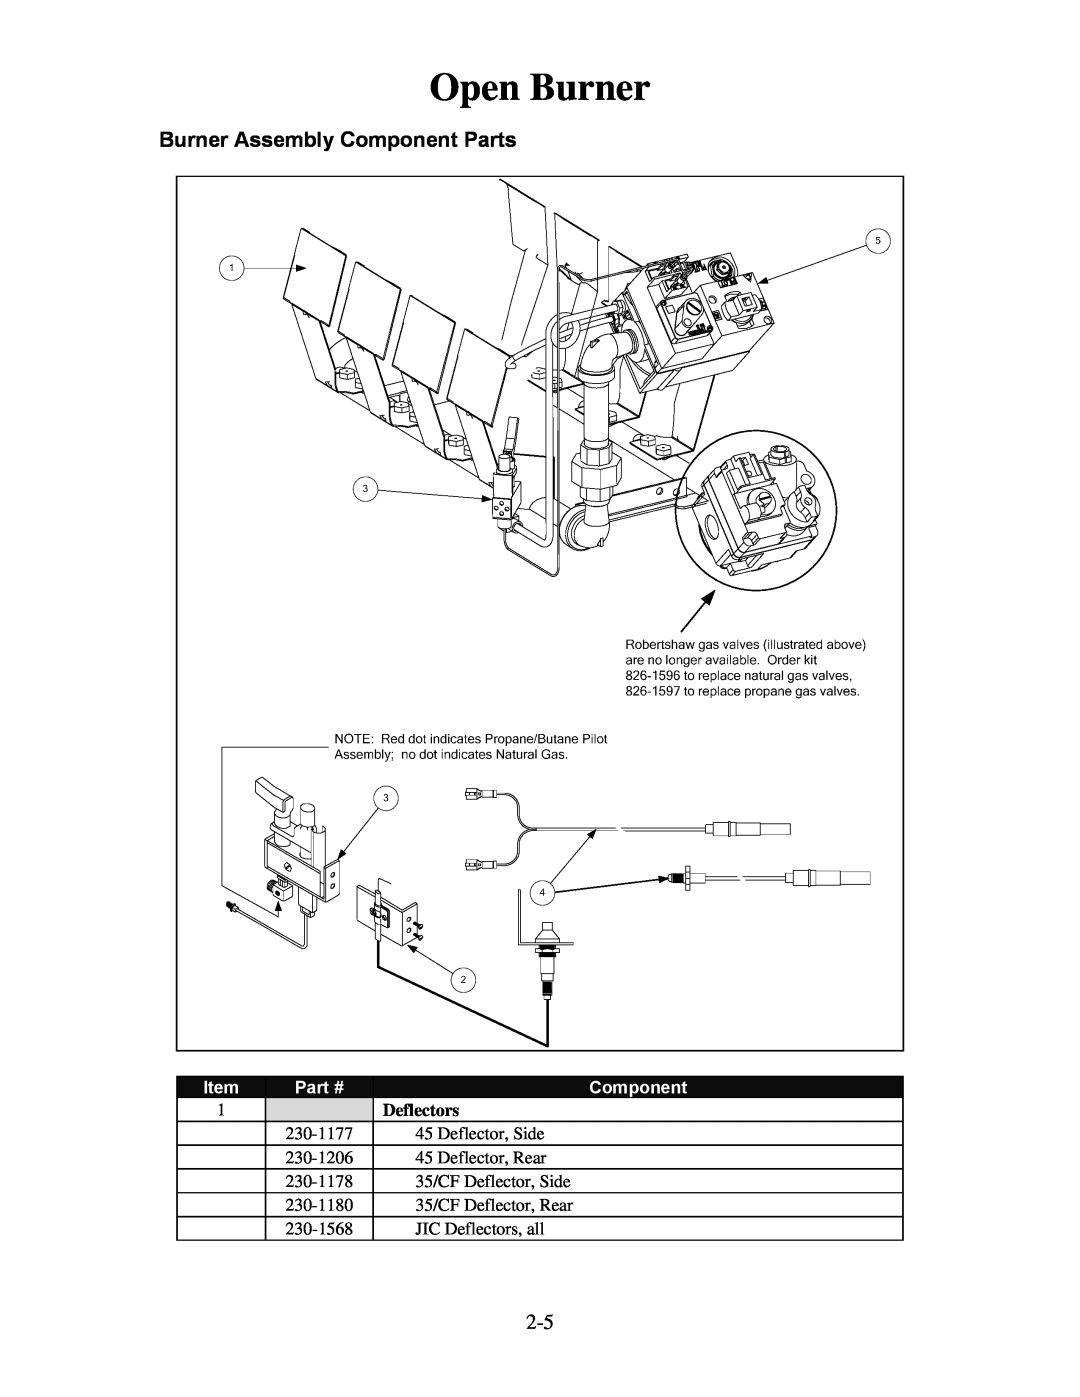 Frymaster H55 manual Open Burner, Burner Assembly Component Parts, Deflectors 